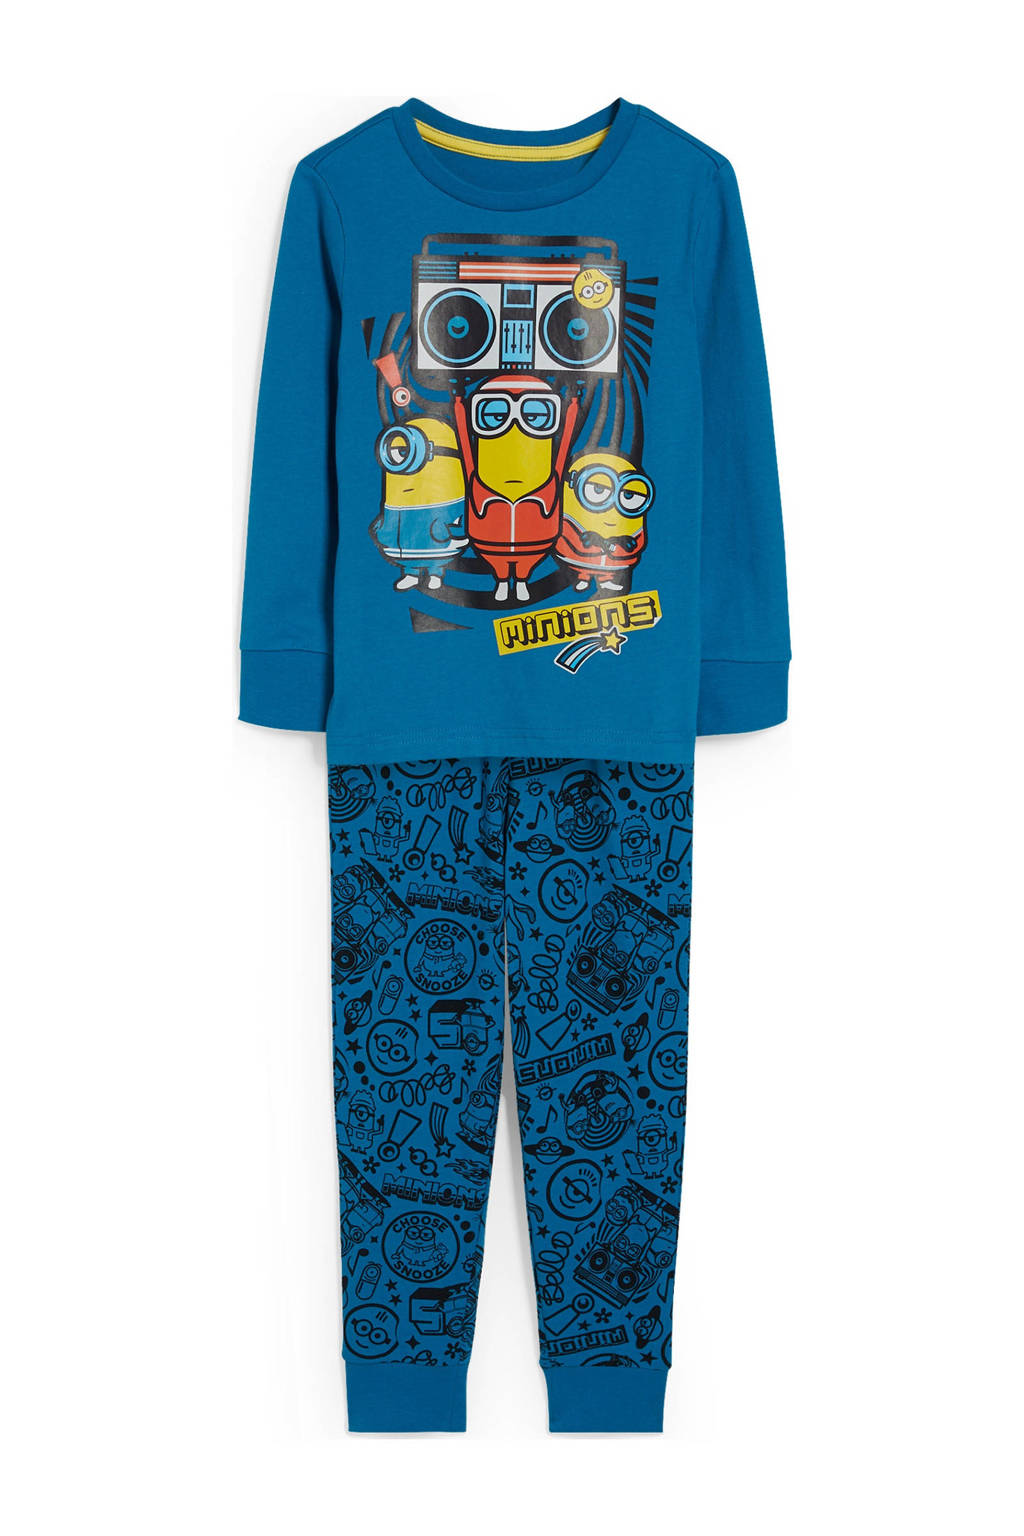 diefstal Interpretatie eb C&A Minions pyjama blauw/zwart/geel | wehkamp